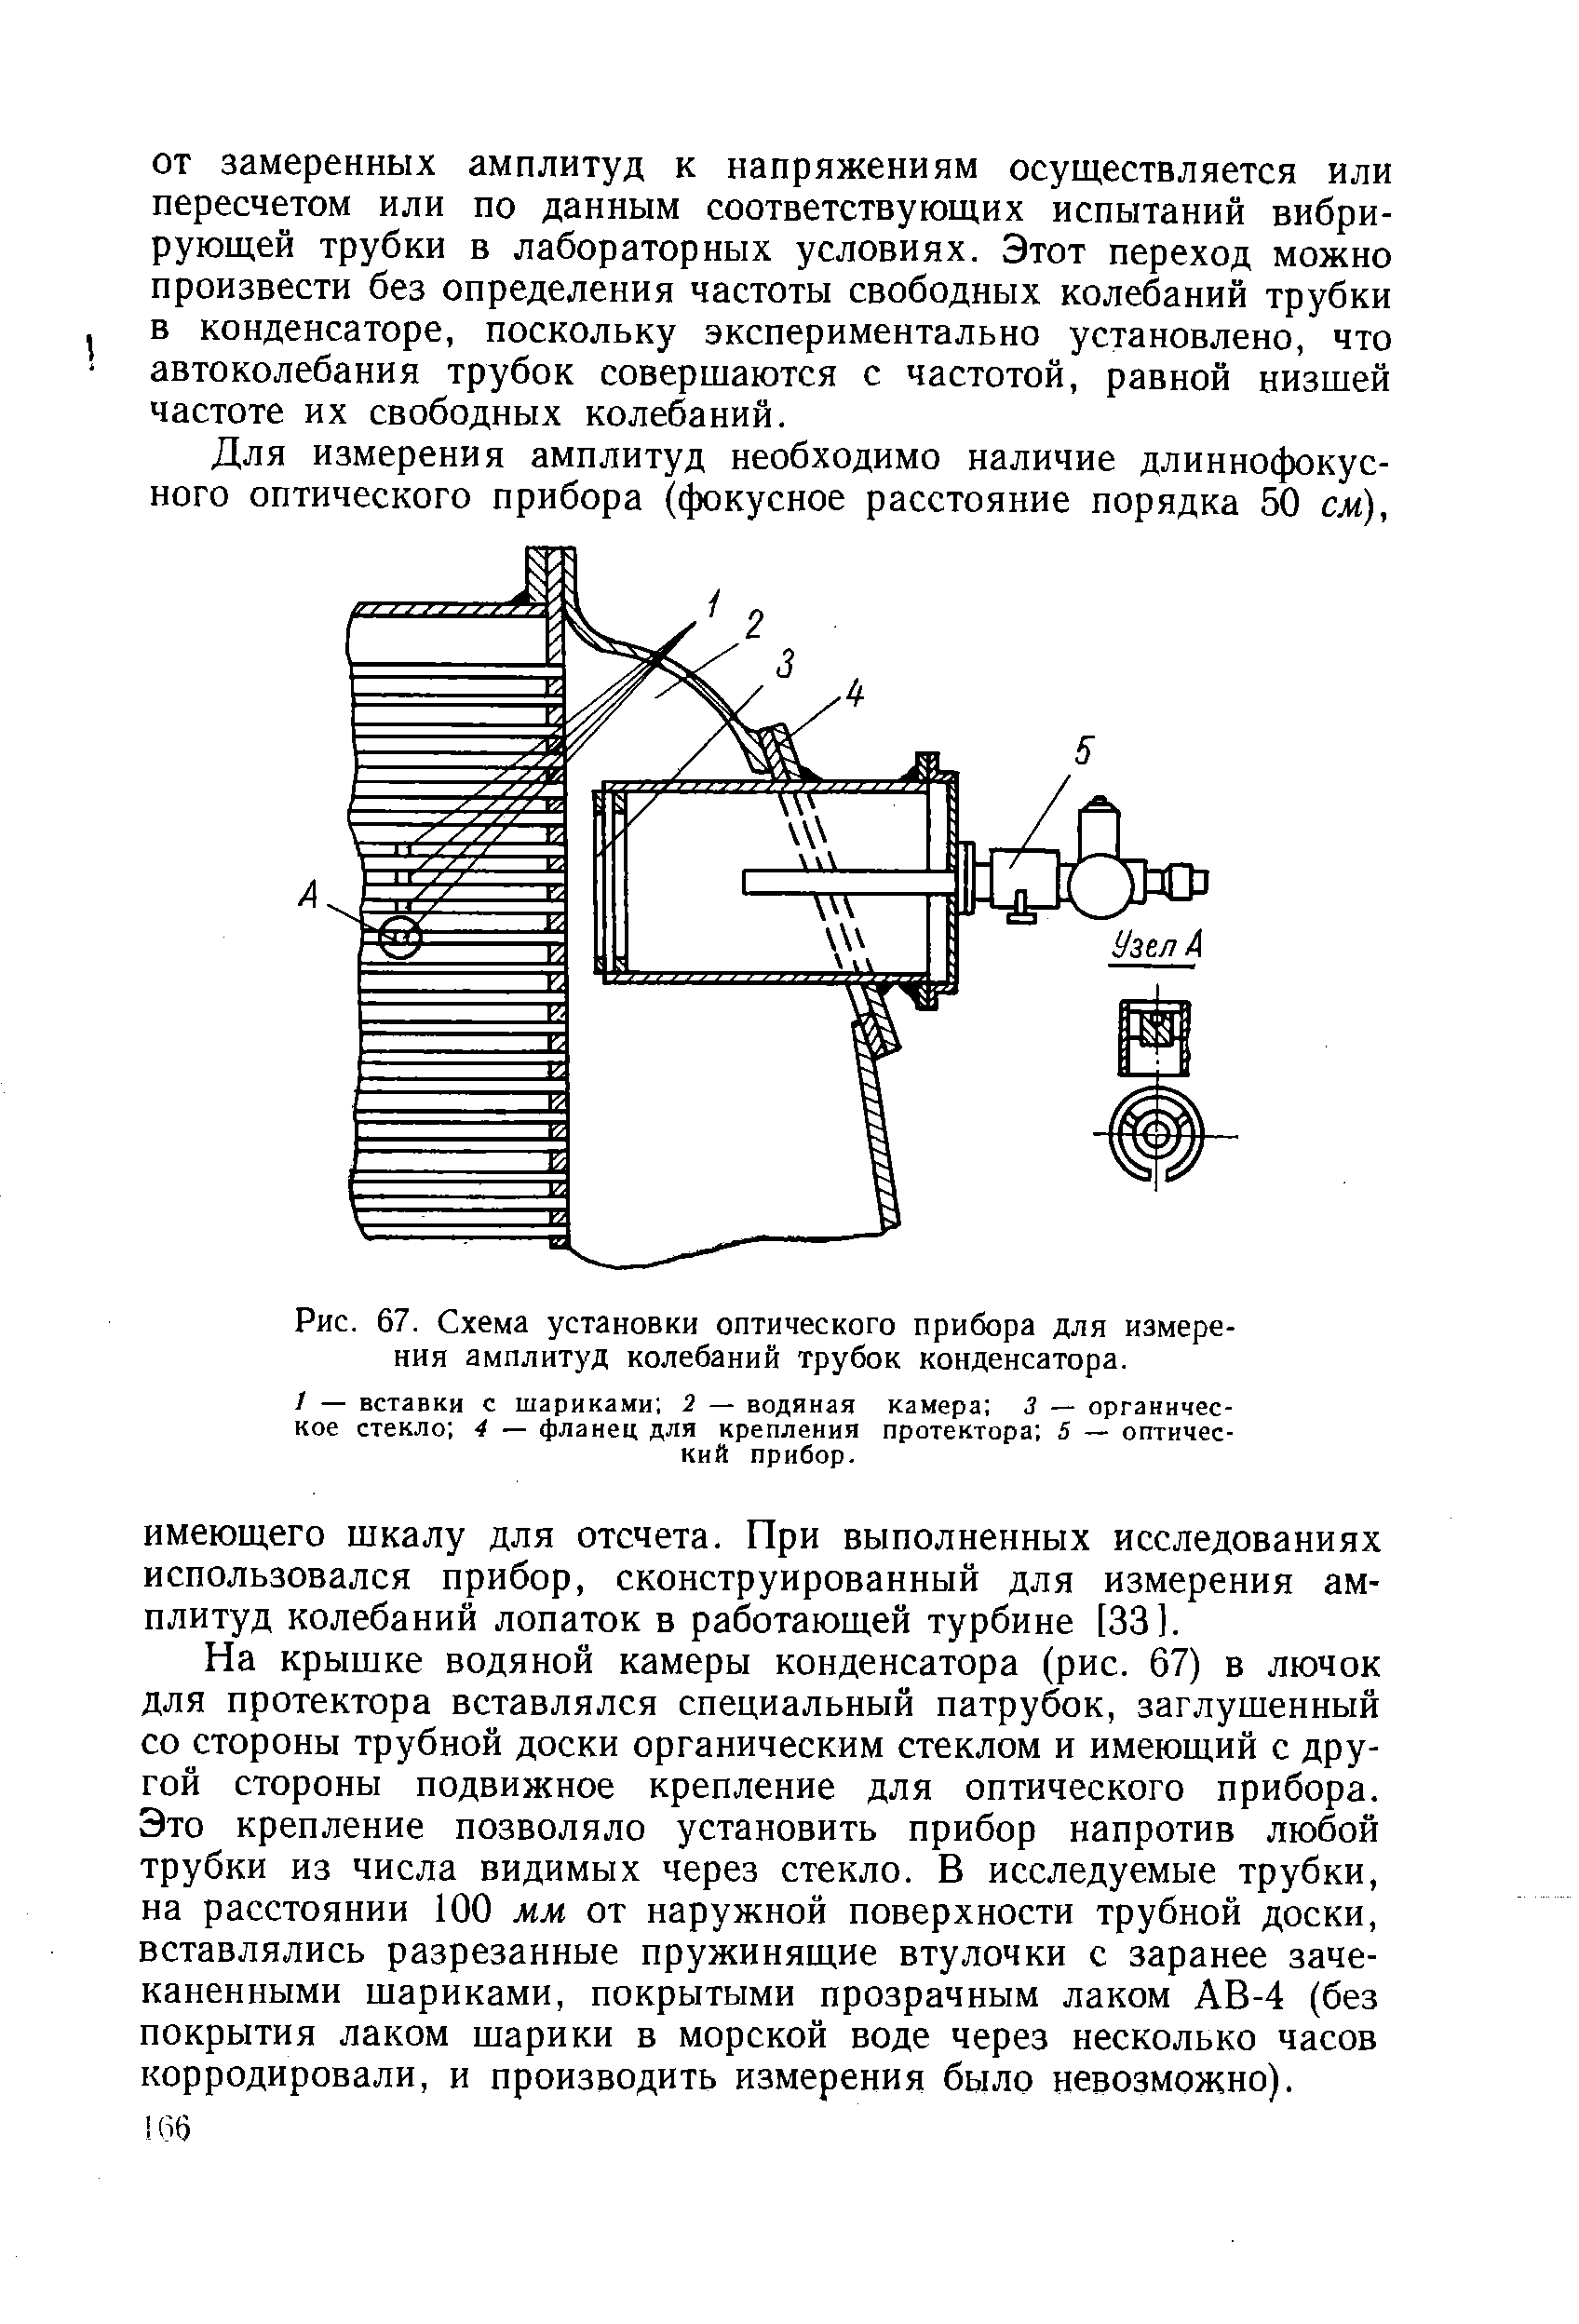 Рис. 67. Схема установки <a href="/info/3186">оптического прибора</a> для <a href="/info/394824">измерения амплитуд колебаний</a> трубок конденсатора.
